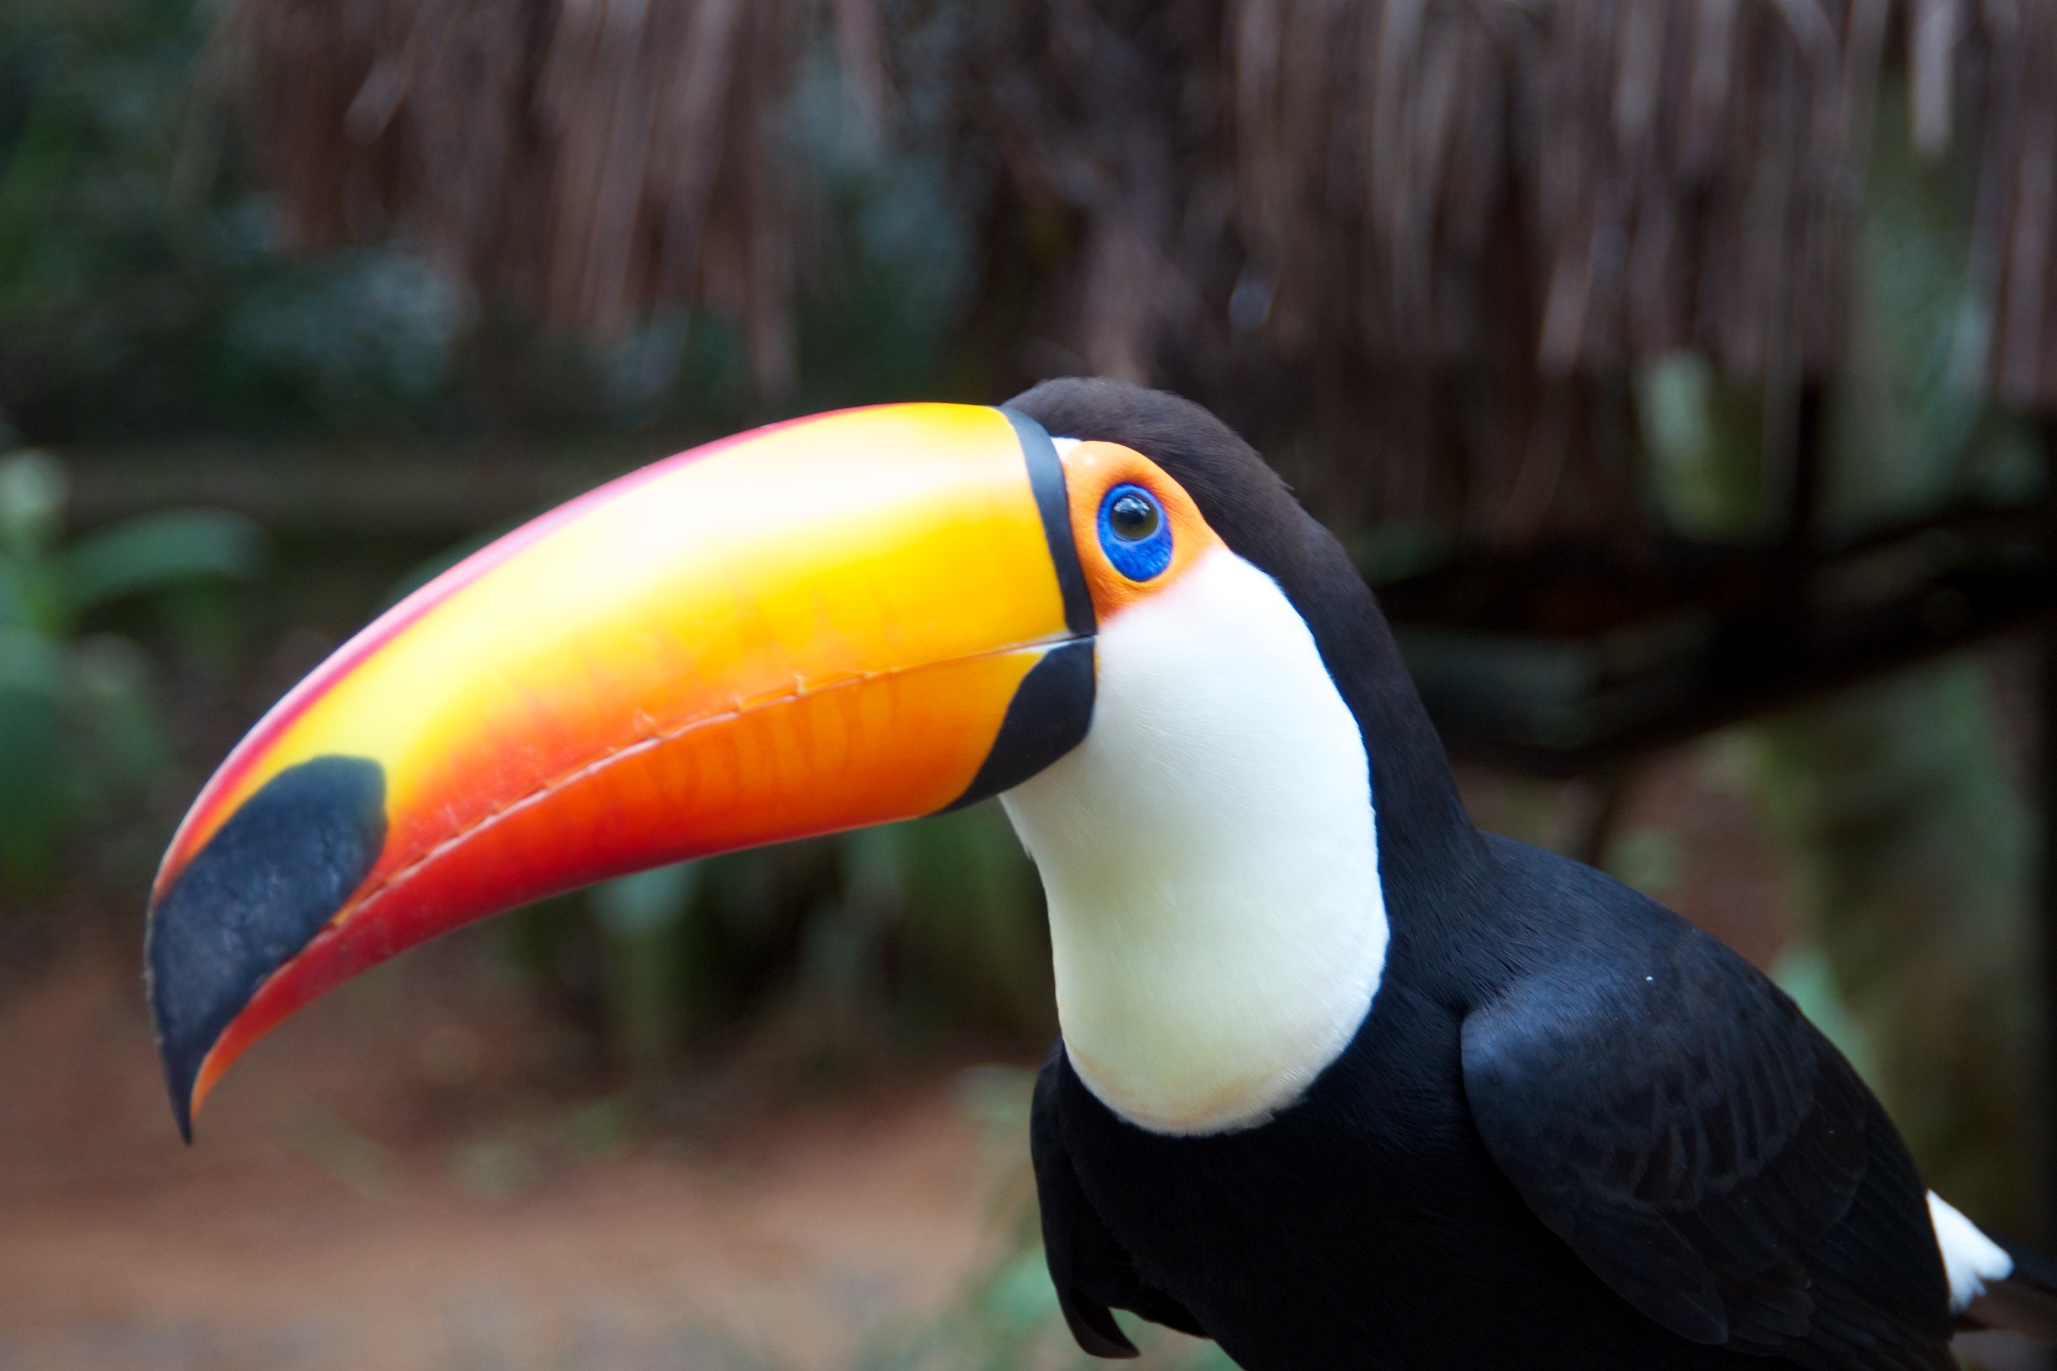  Adult toucan, Bird sanctuary, Iguazu National Park, Brazil 